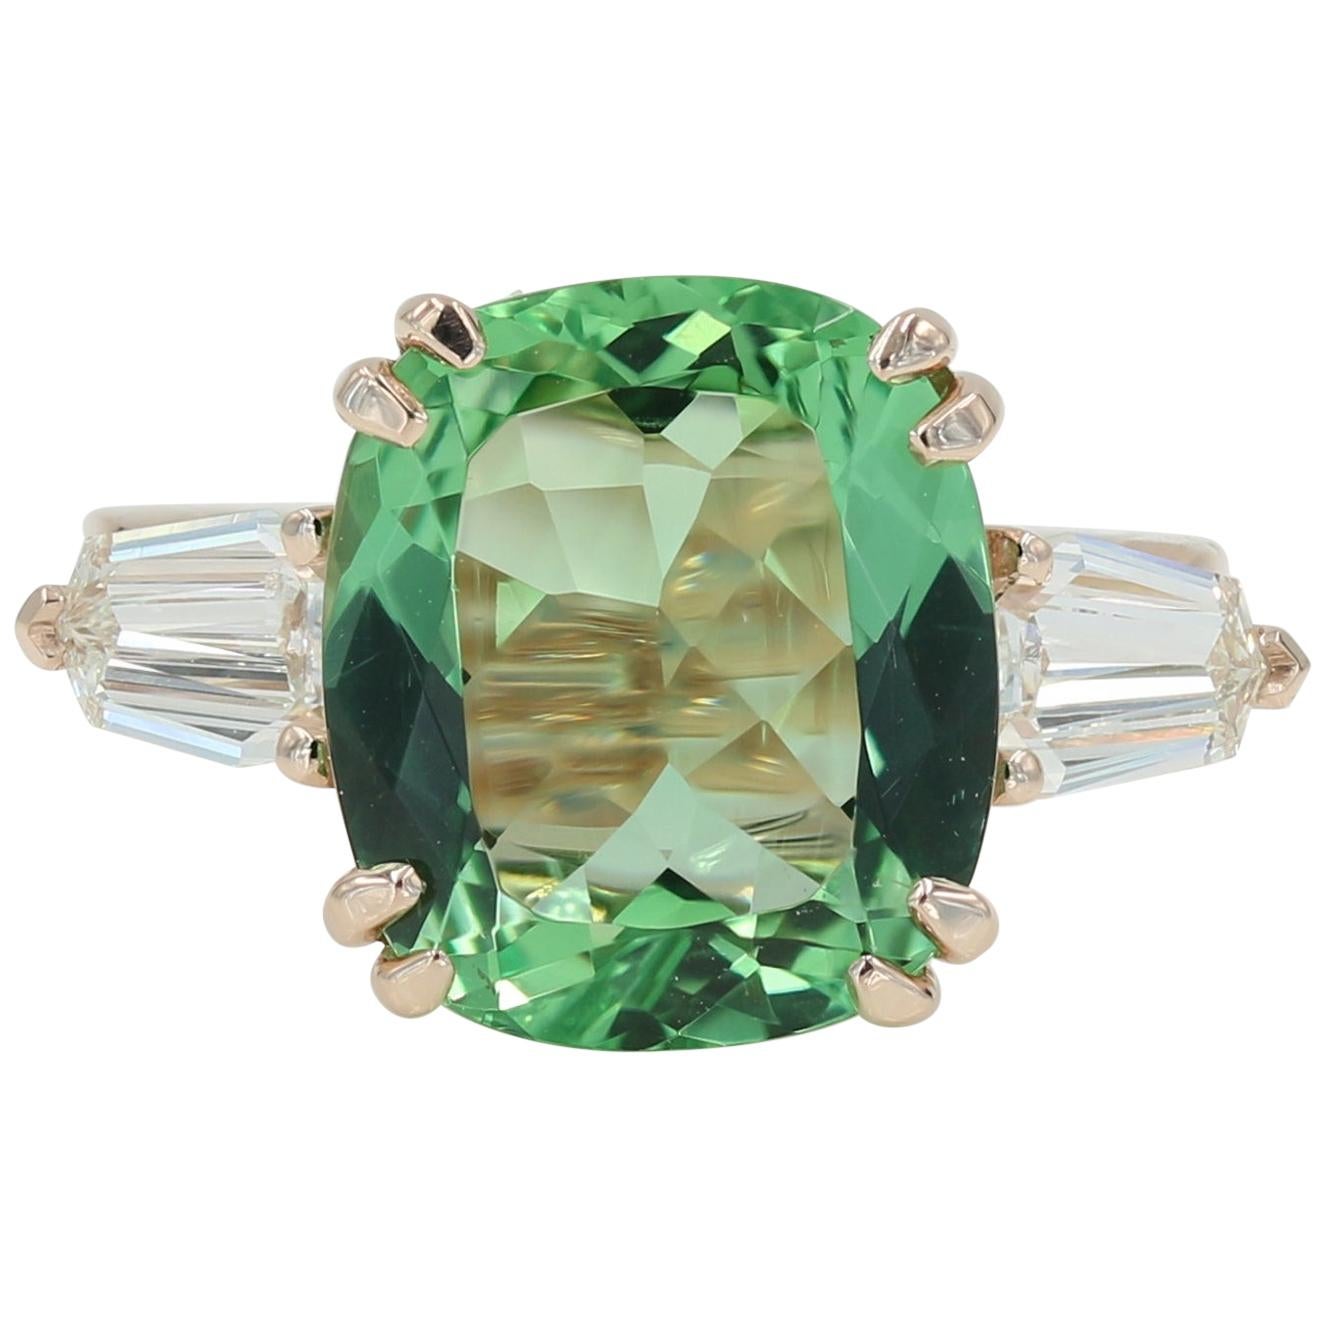 5.22 Carat Green Beryl and Diamond Ring in Rose Gold